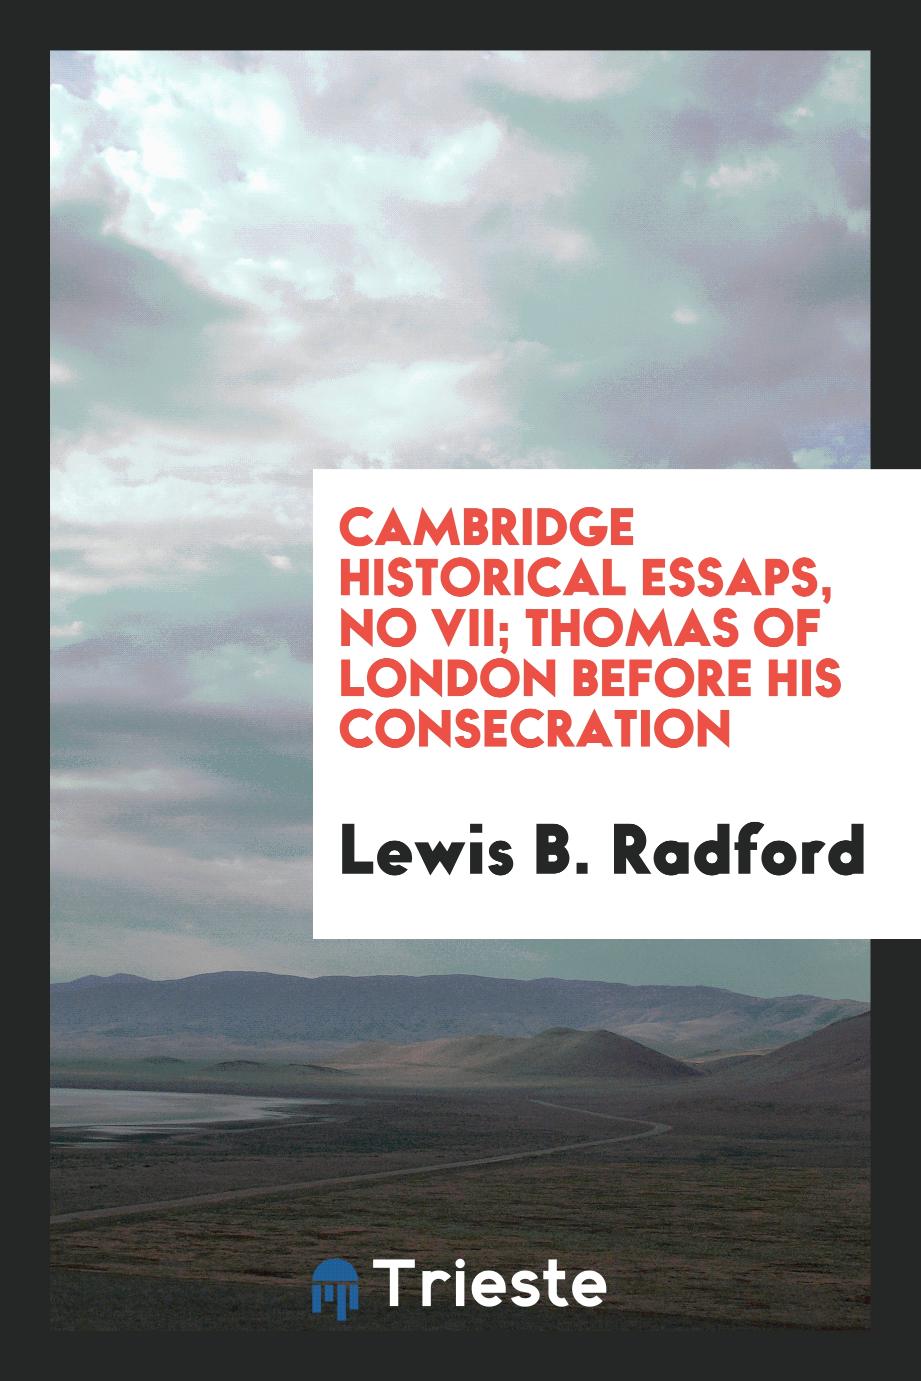 Lewis B. Radford - Cambridge Historical Essaps, No VII; Thomas of London before his consecration